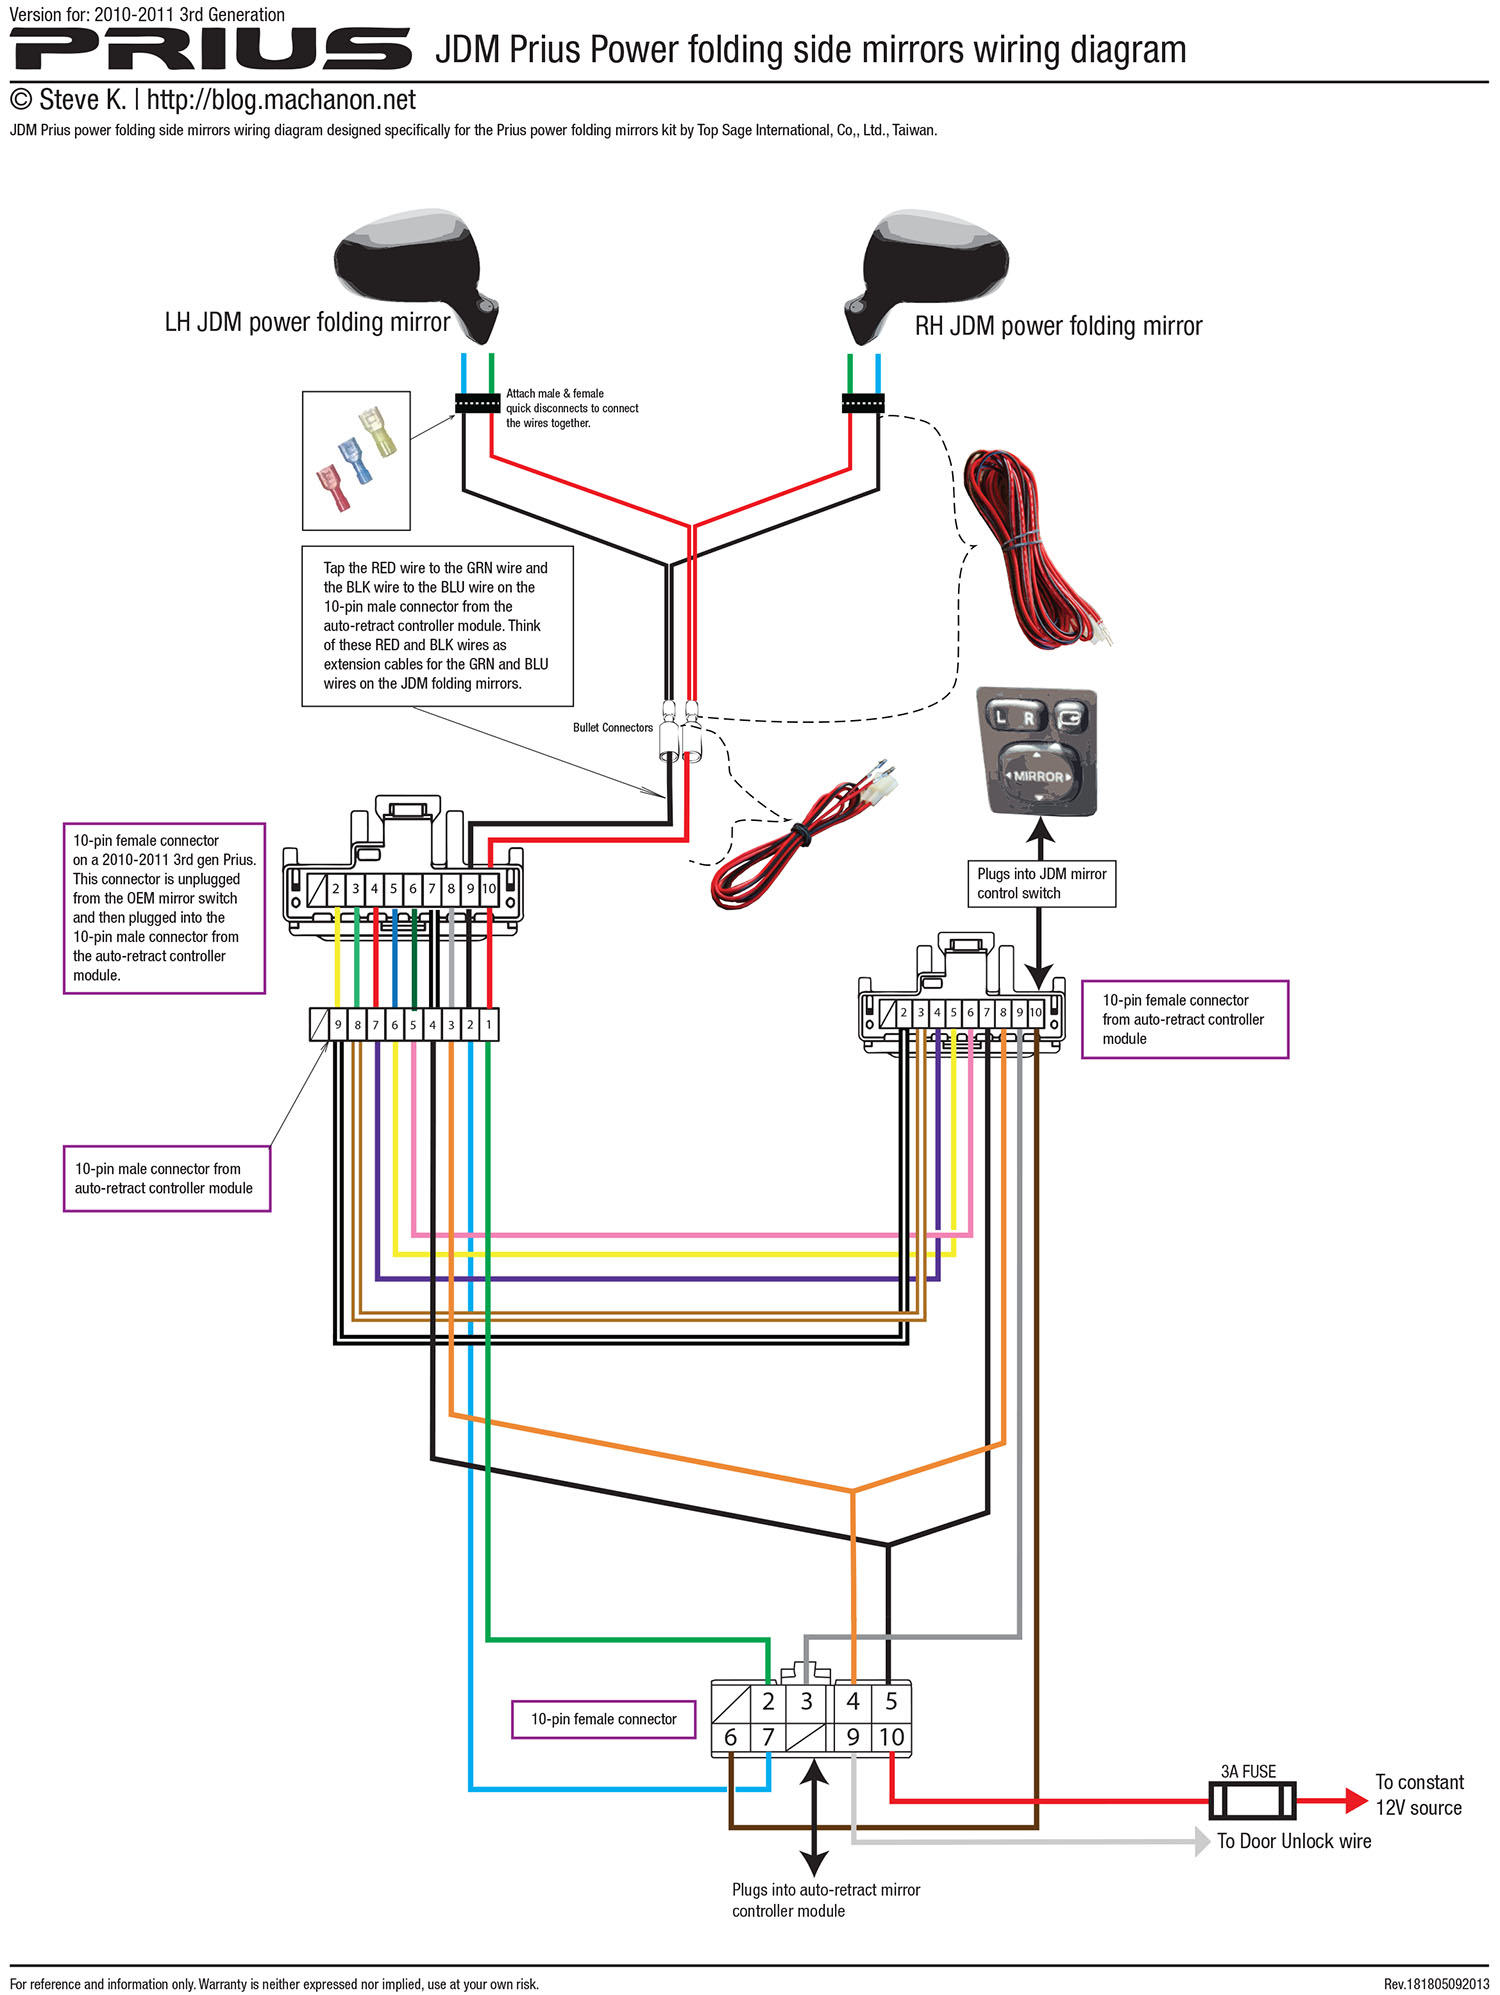 2010-2011 3rd gen Prius JDM power folding side mirror wiring diagram (using kit by Top Sage International, Co., Ltd.)